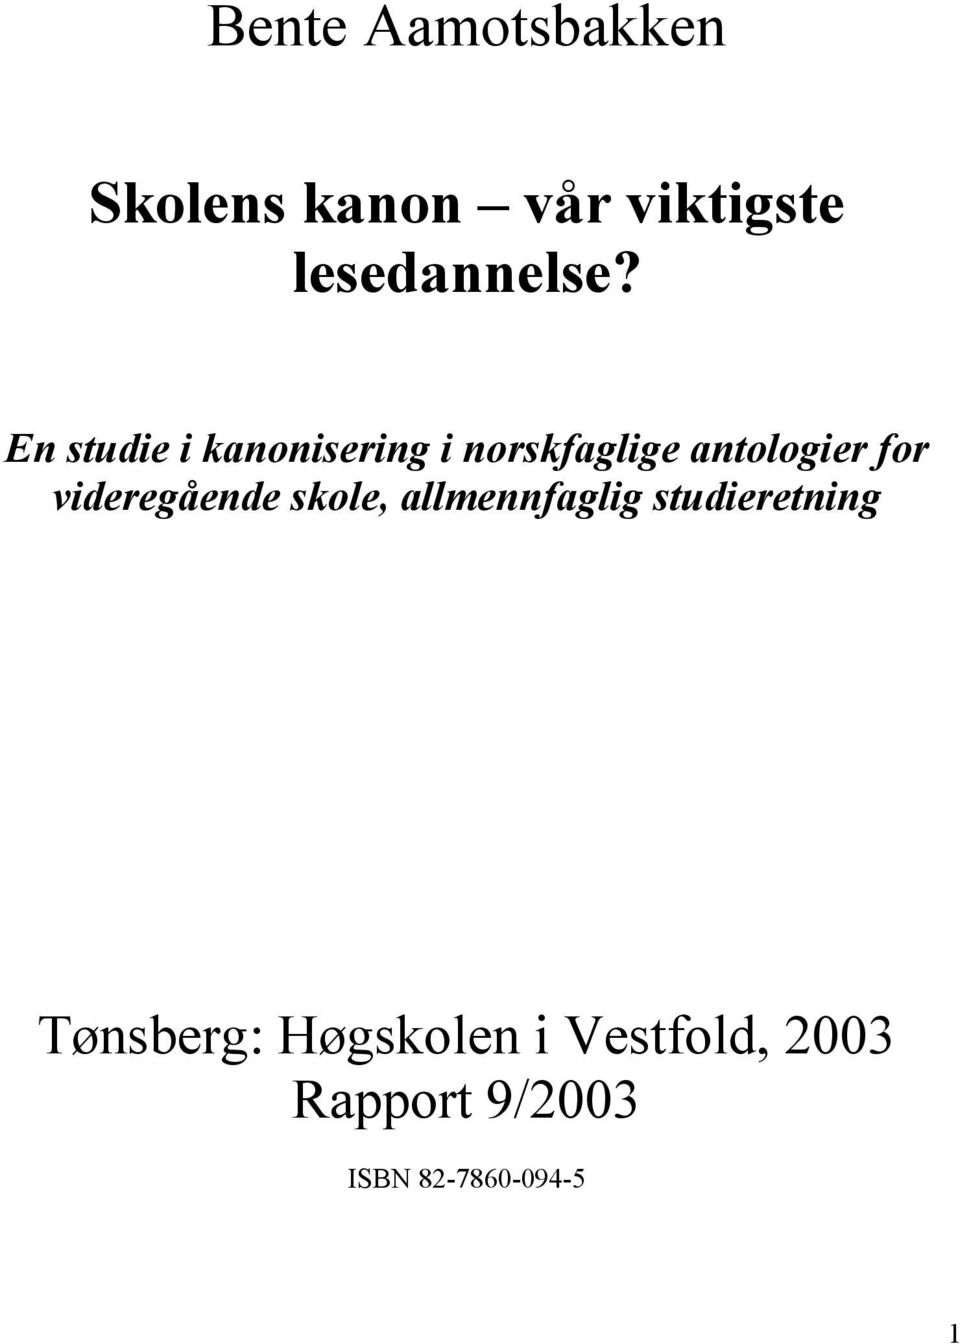 En studie i kanonisering i norskfaglige antologier for